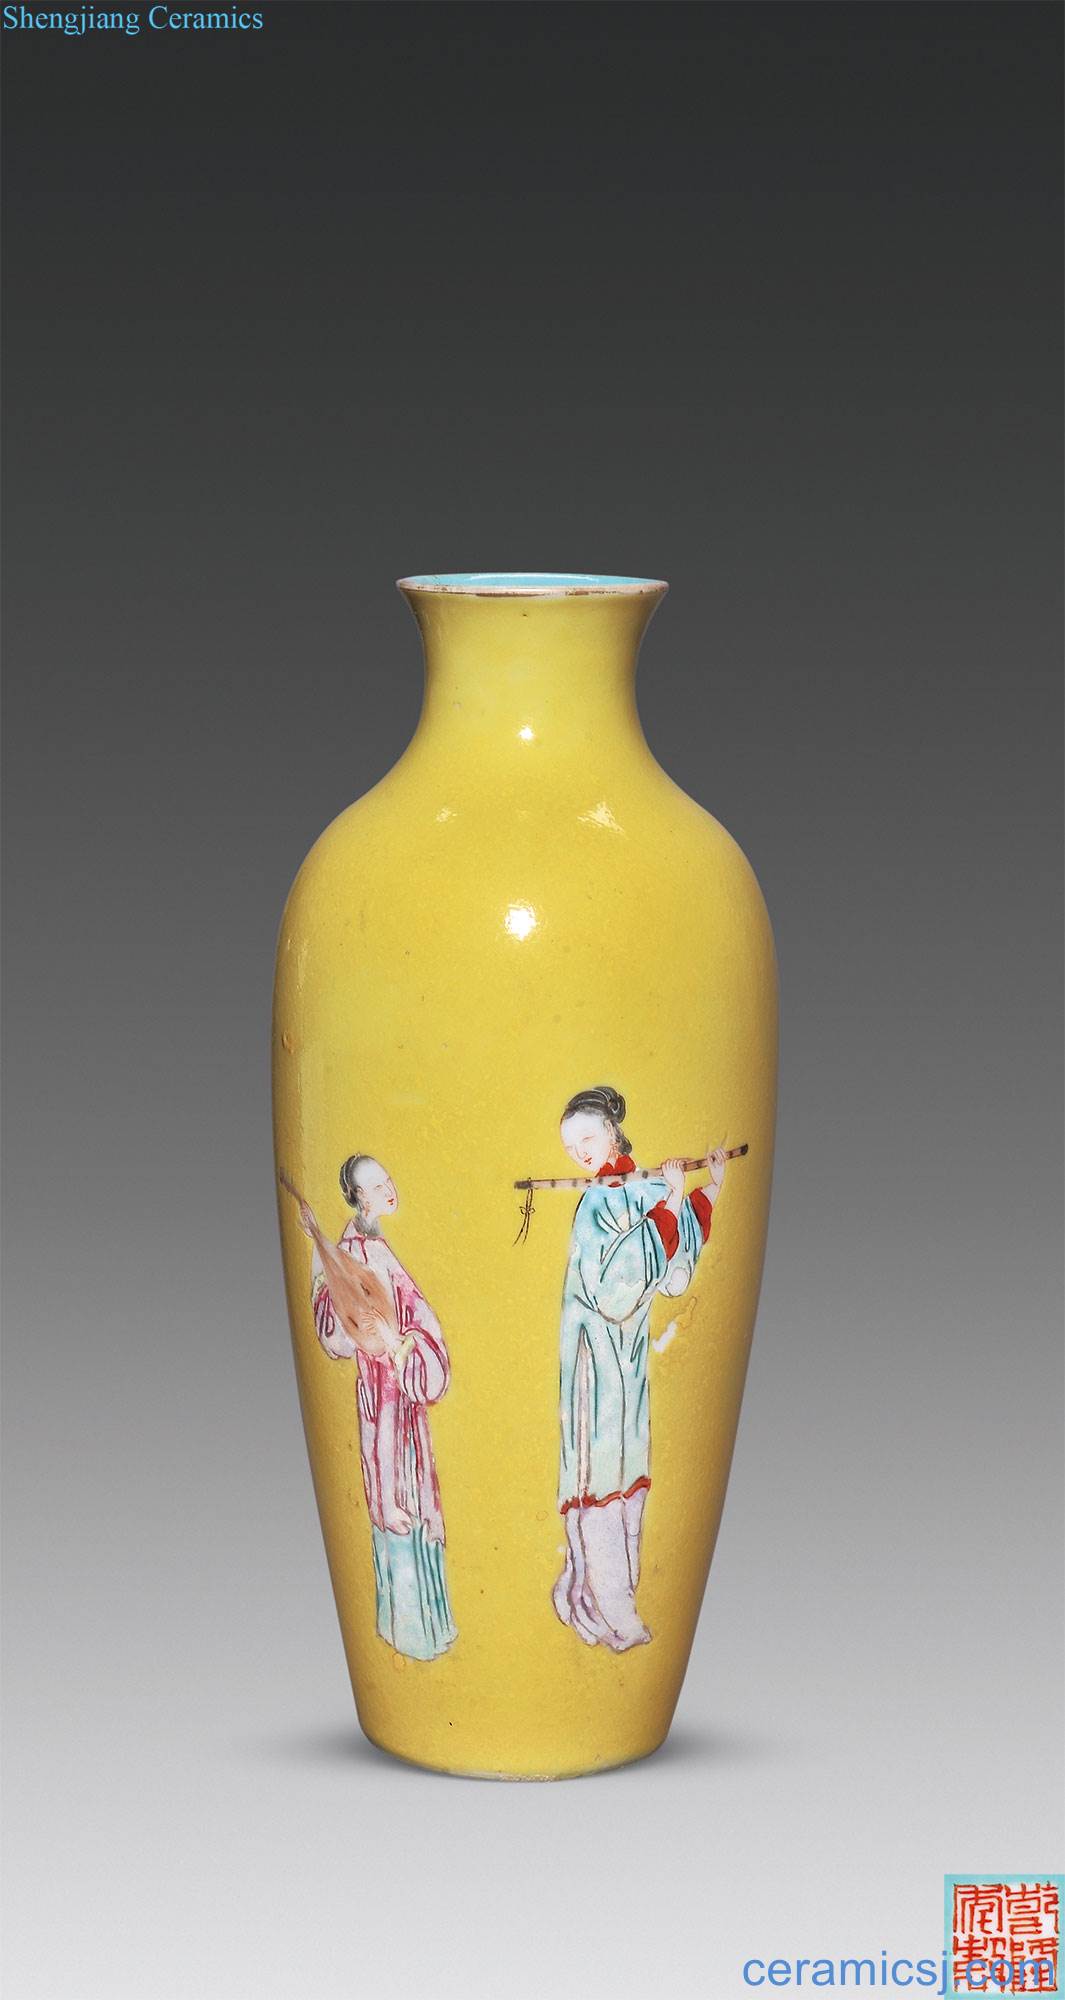 Qing qianlong to pastel yellow bottle had